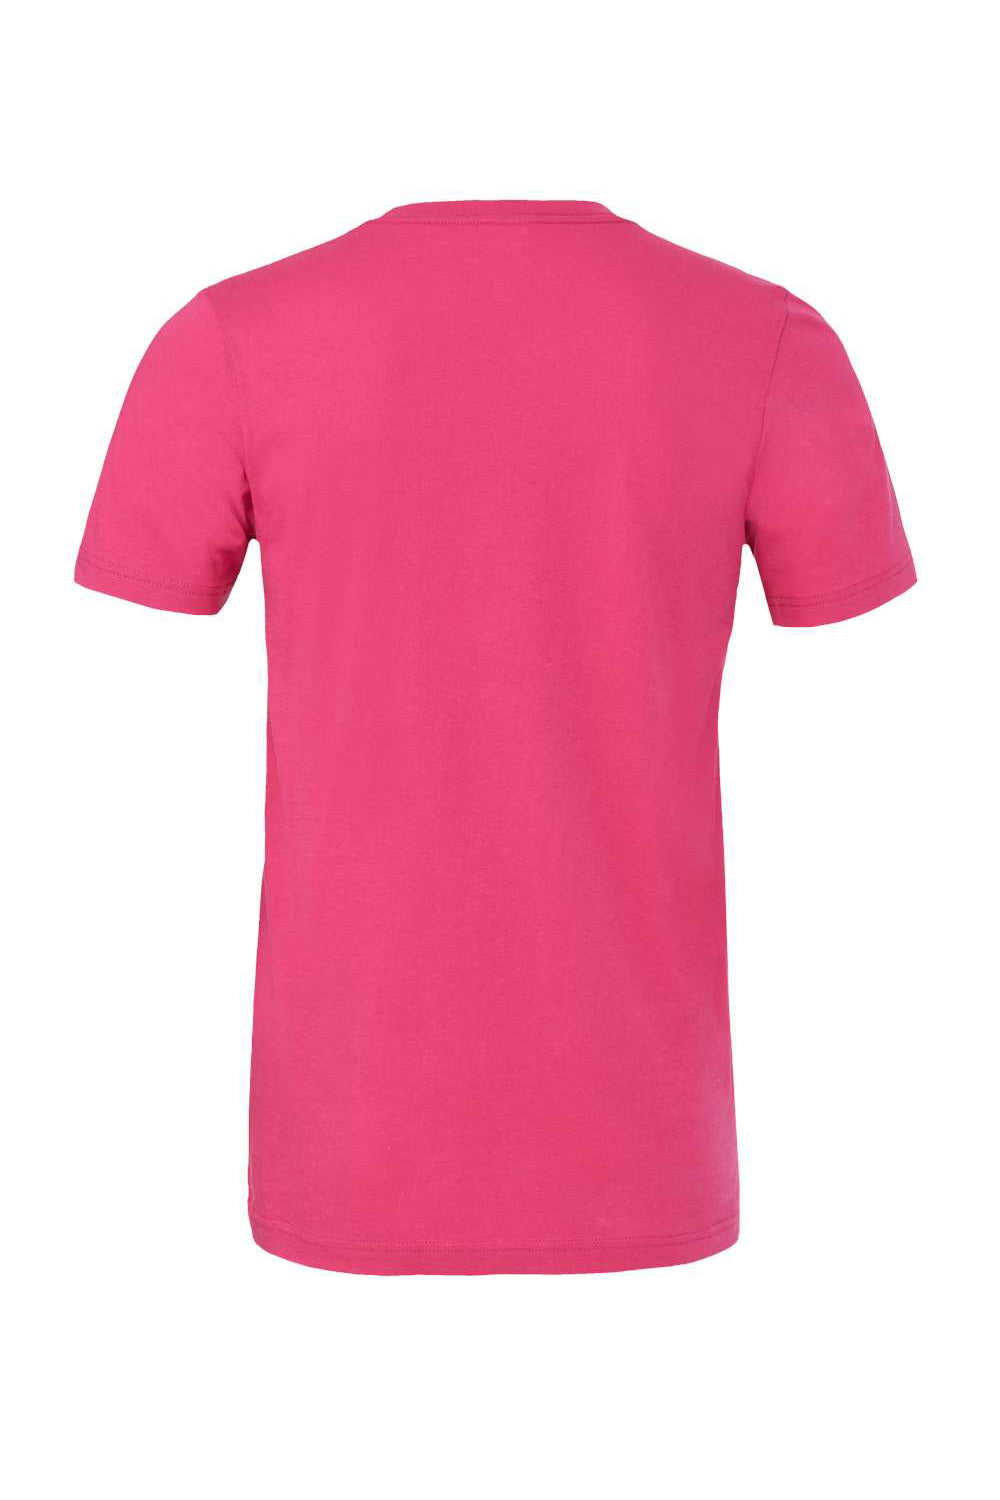 Bella + Canvas BC3001/3001C Mens Jersey Short Sleeve Crewneck T-Shirt Berry Pink Flat Back